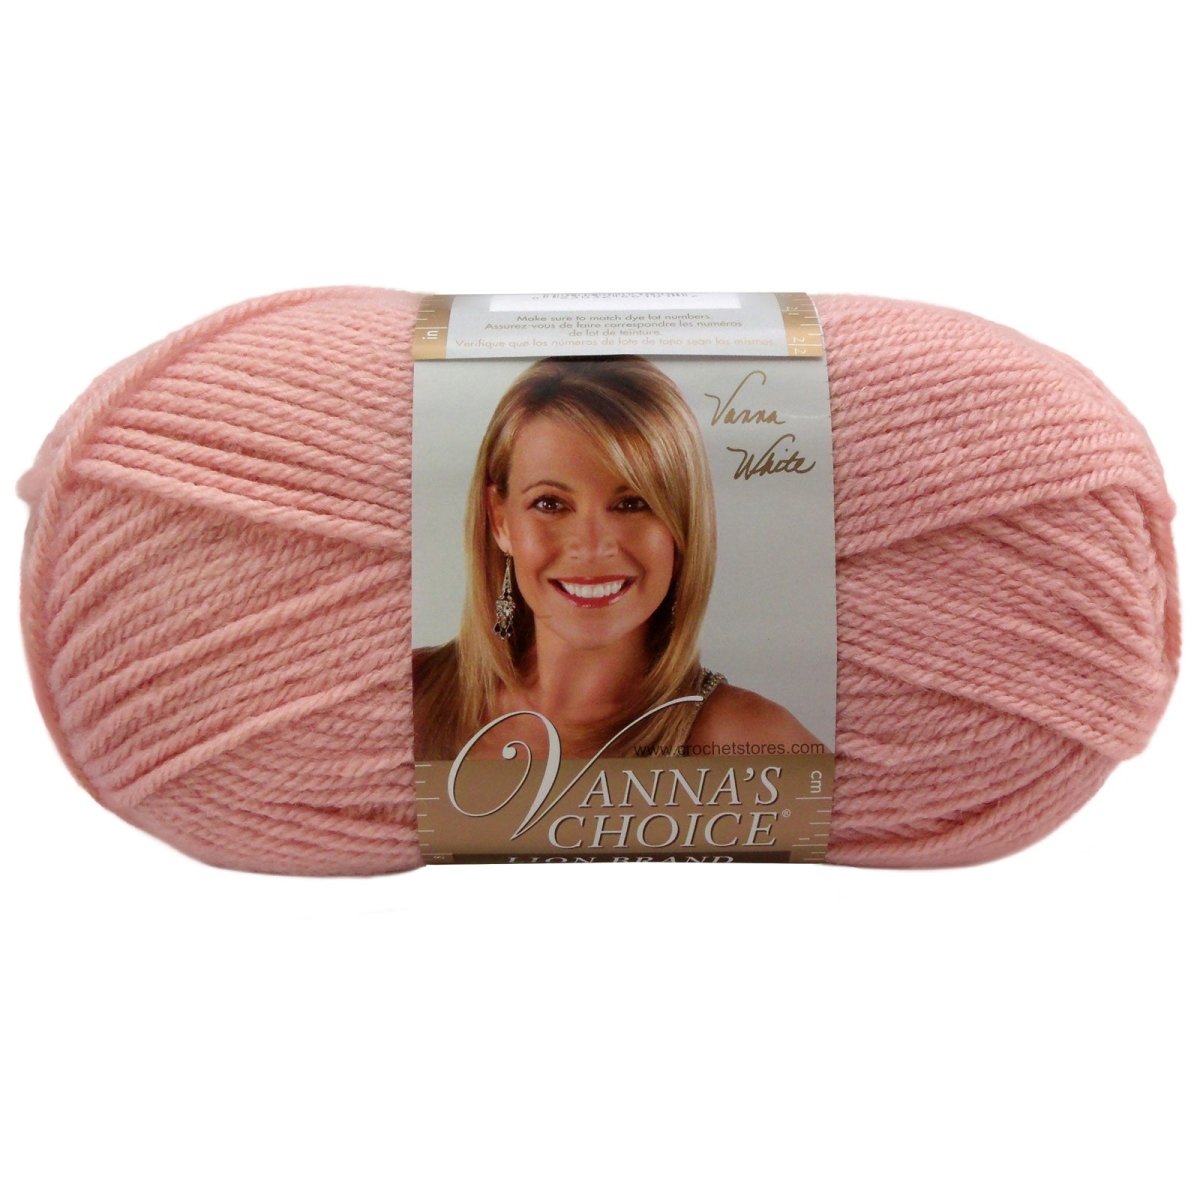 VANNAS CHOICE - Crochetstores860-101